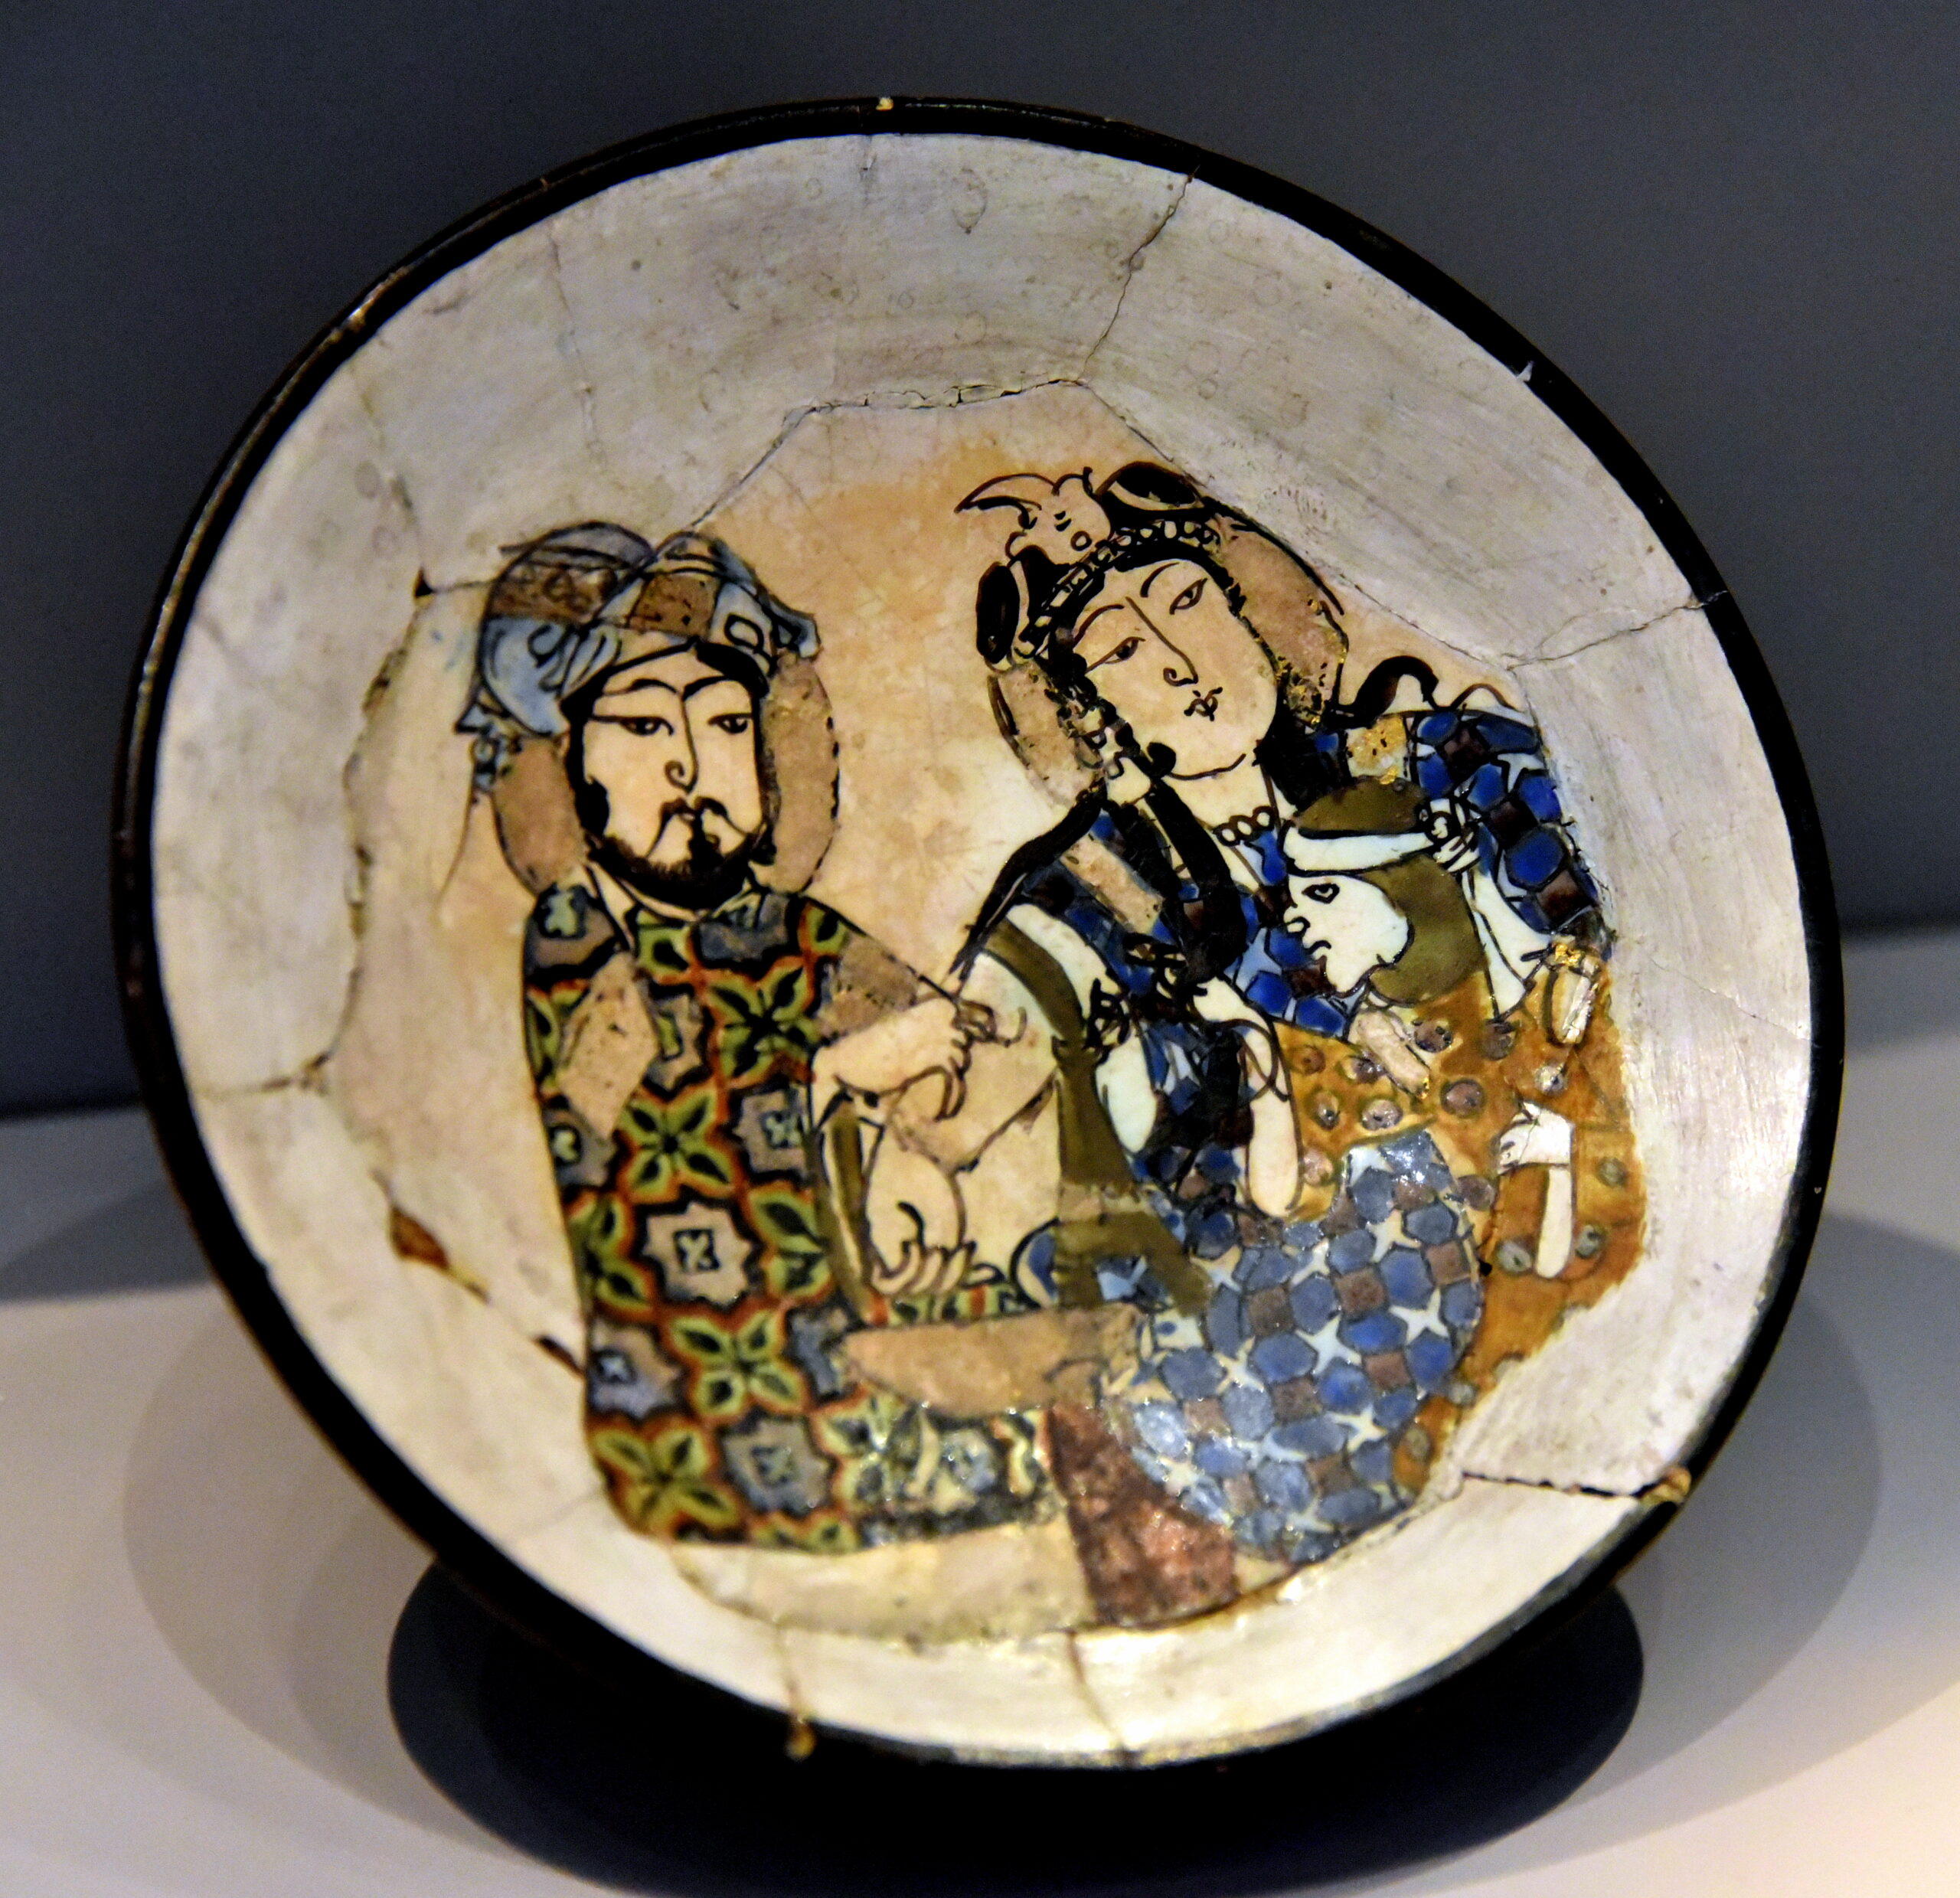 Why is the Anatolian art scene so popular?